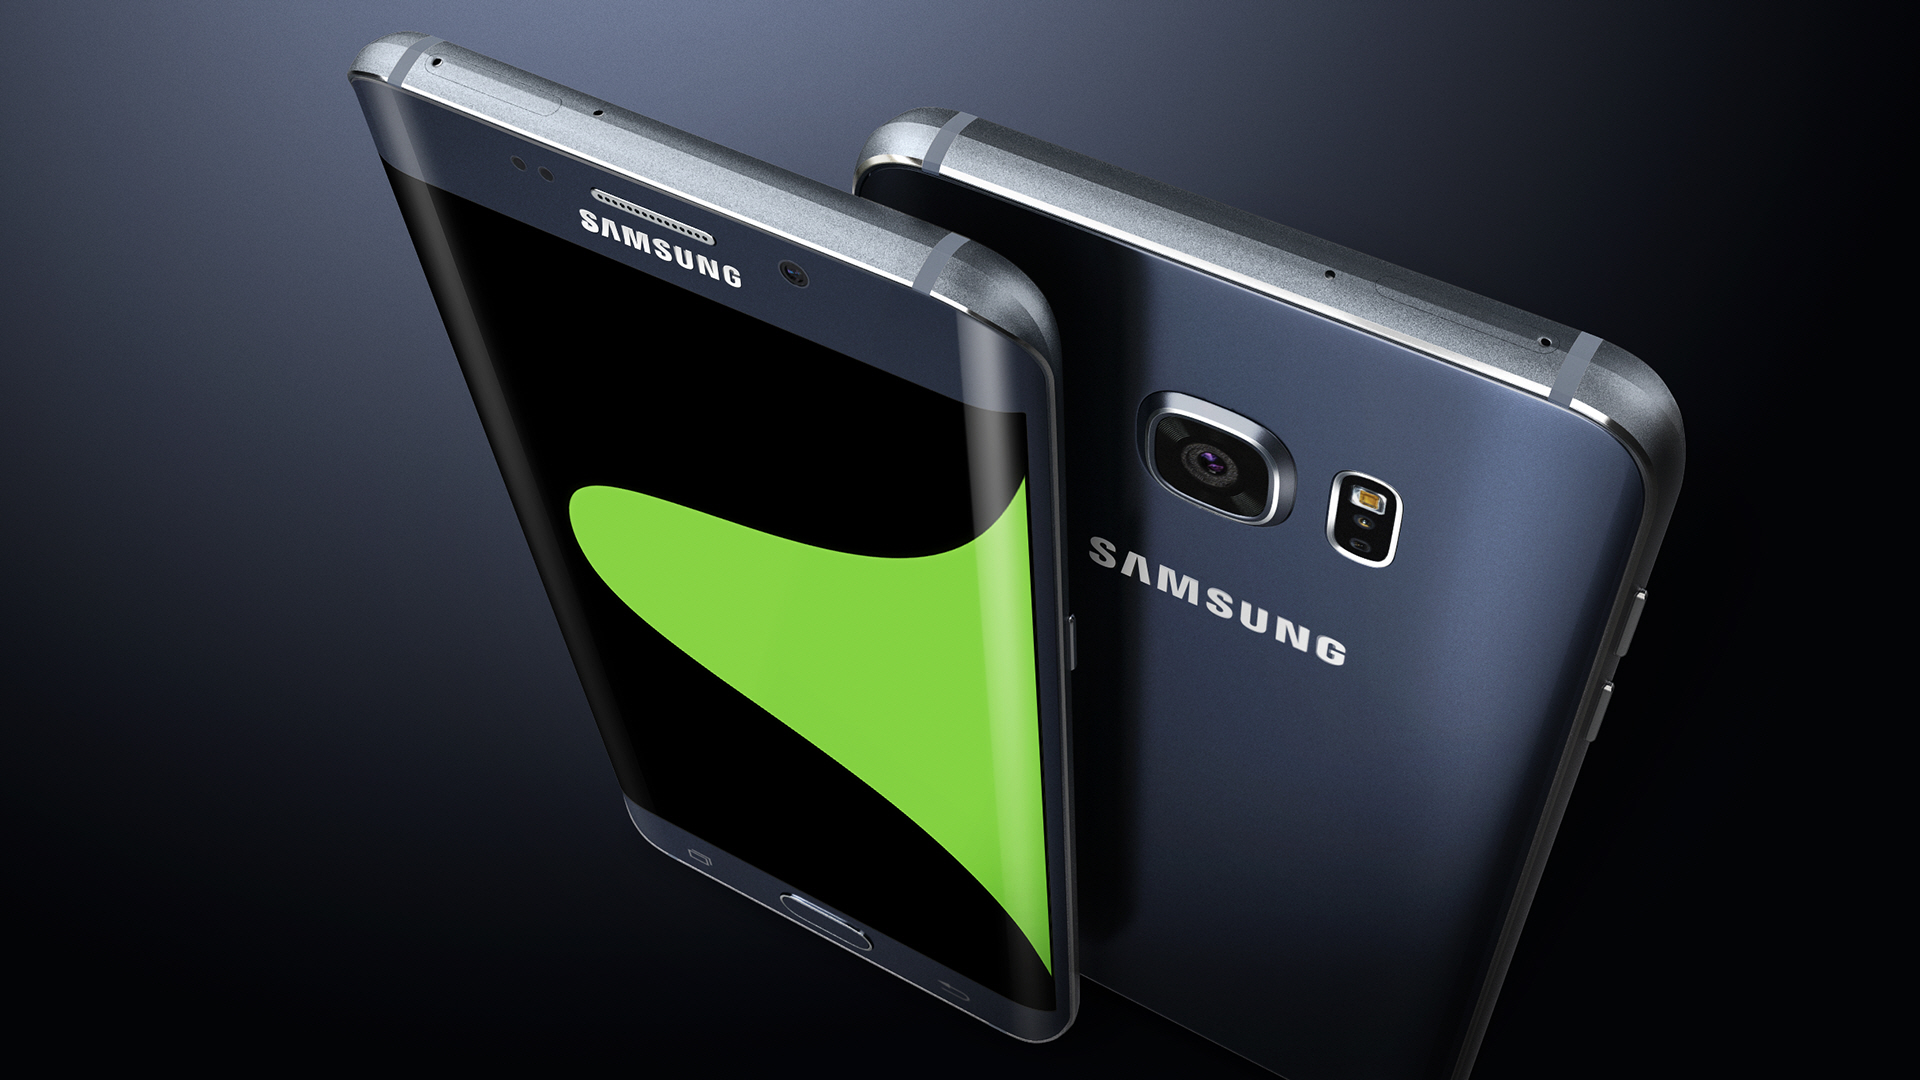 Samsung S6 Edge Plus Hd - HD Wallpaper 